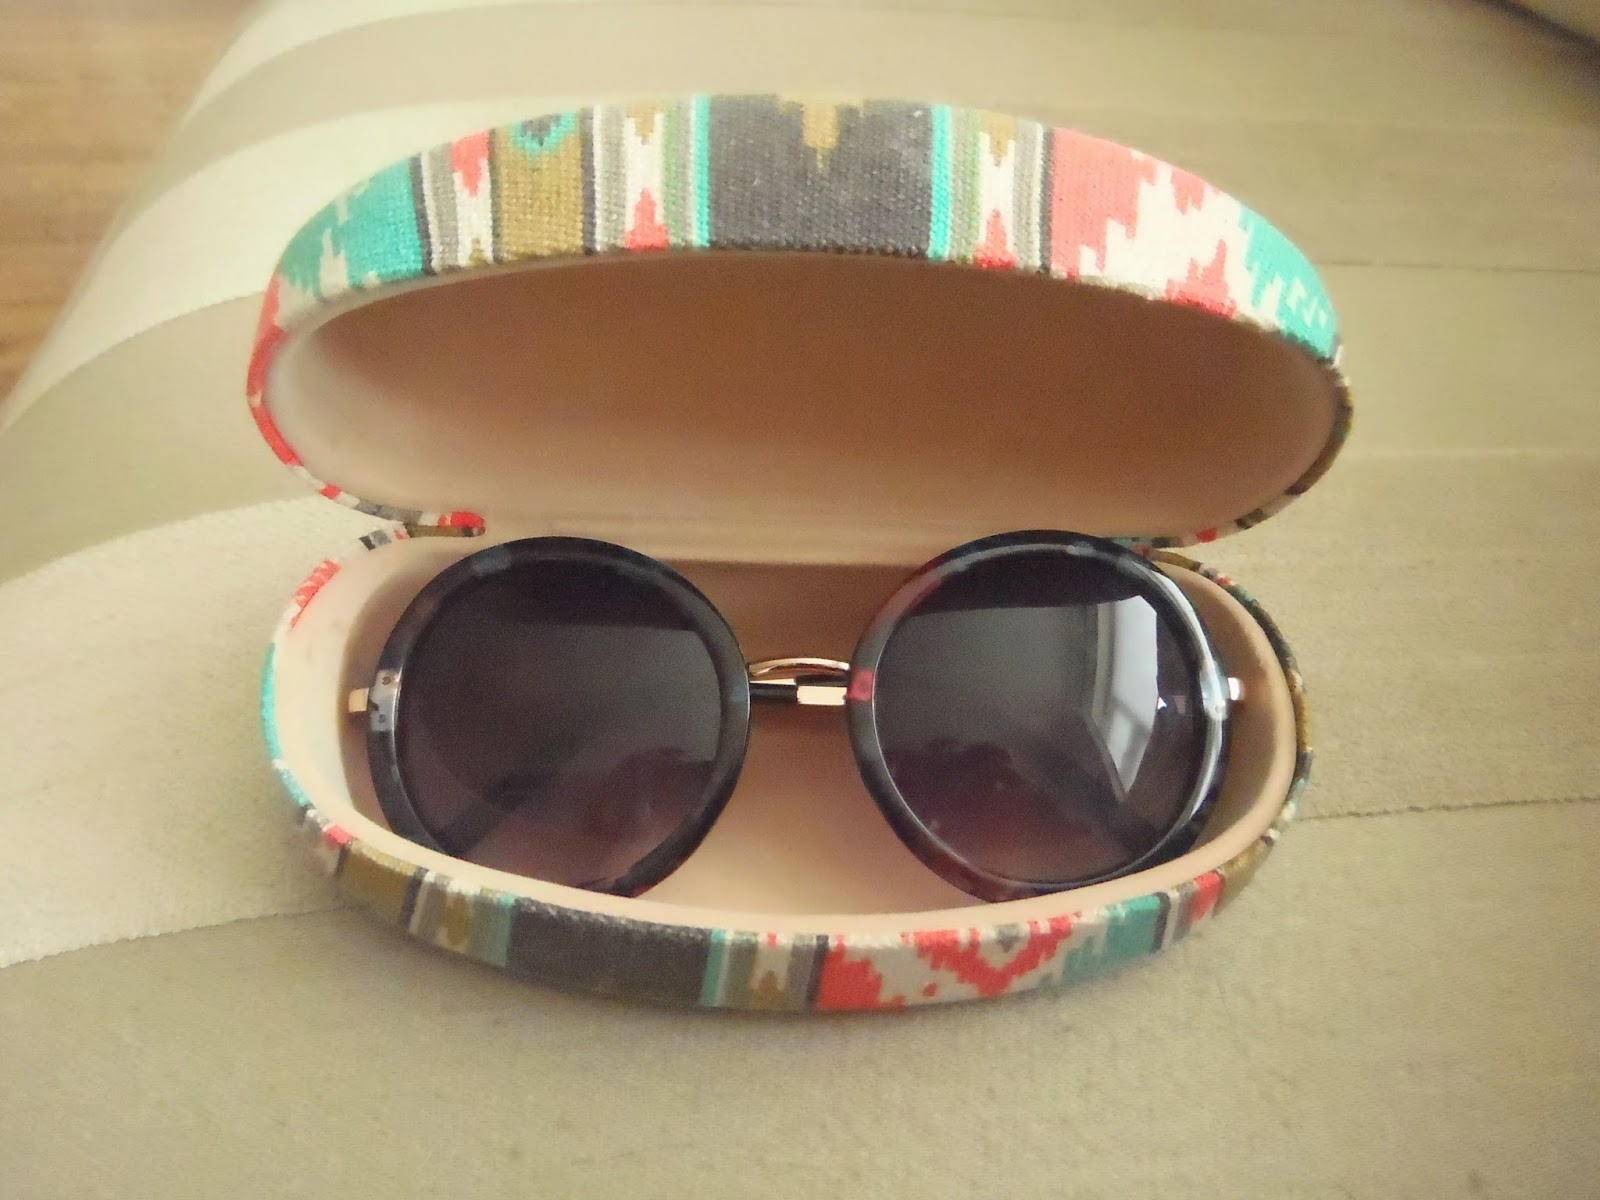 Penneys Primark Sunglasses Case